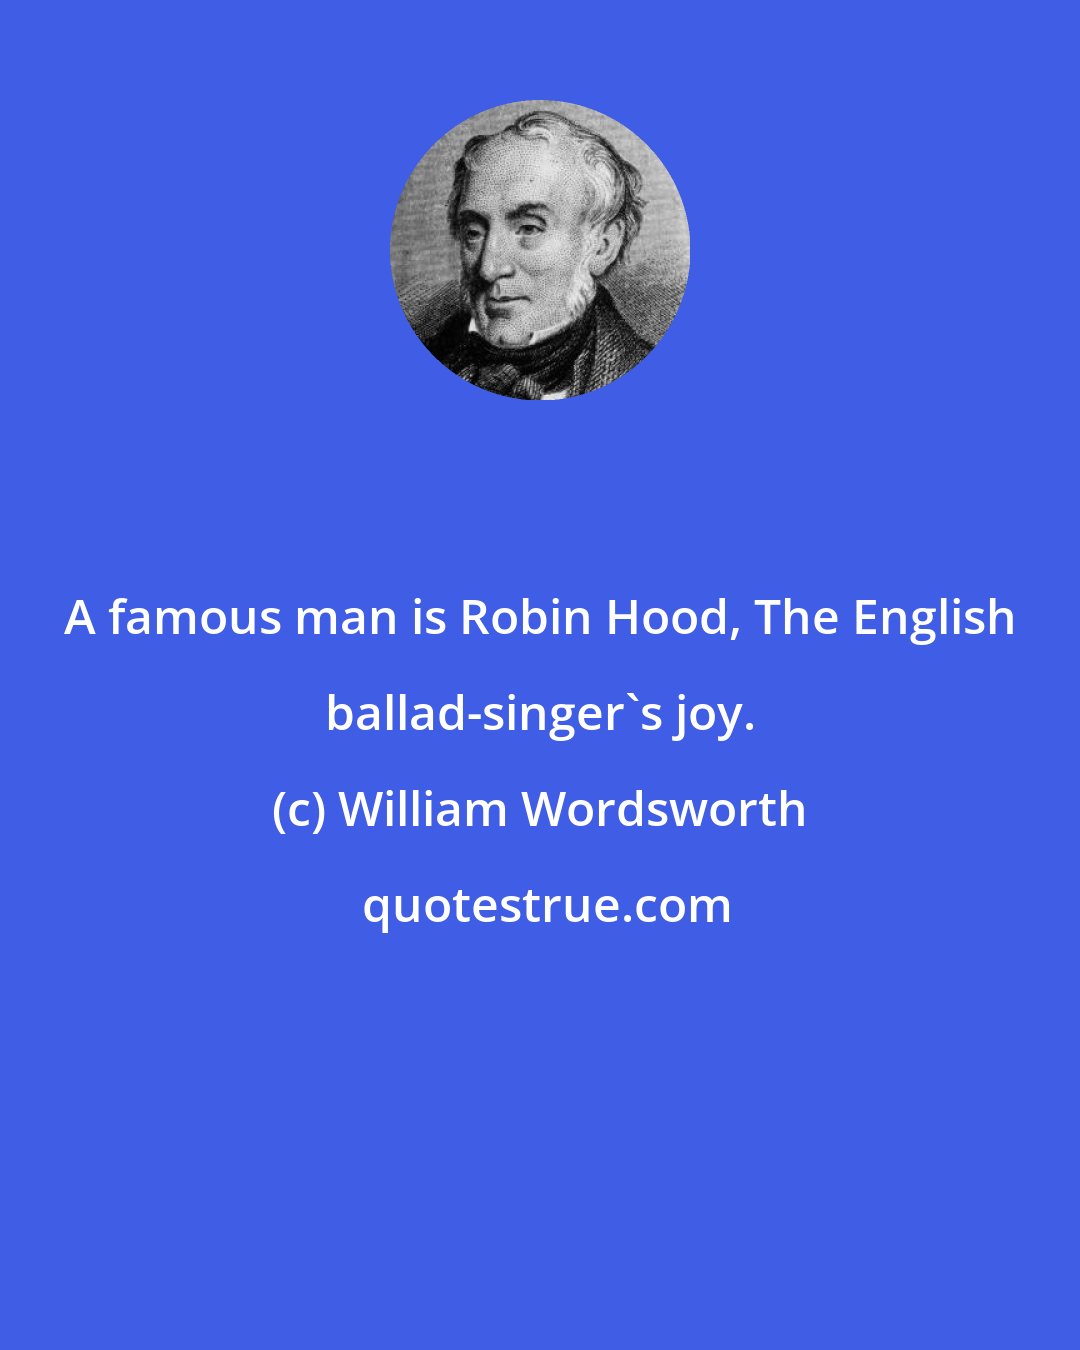 William Wordsworth: A famous man is Robin Hood, The English ballad-singer's joy.